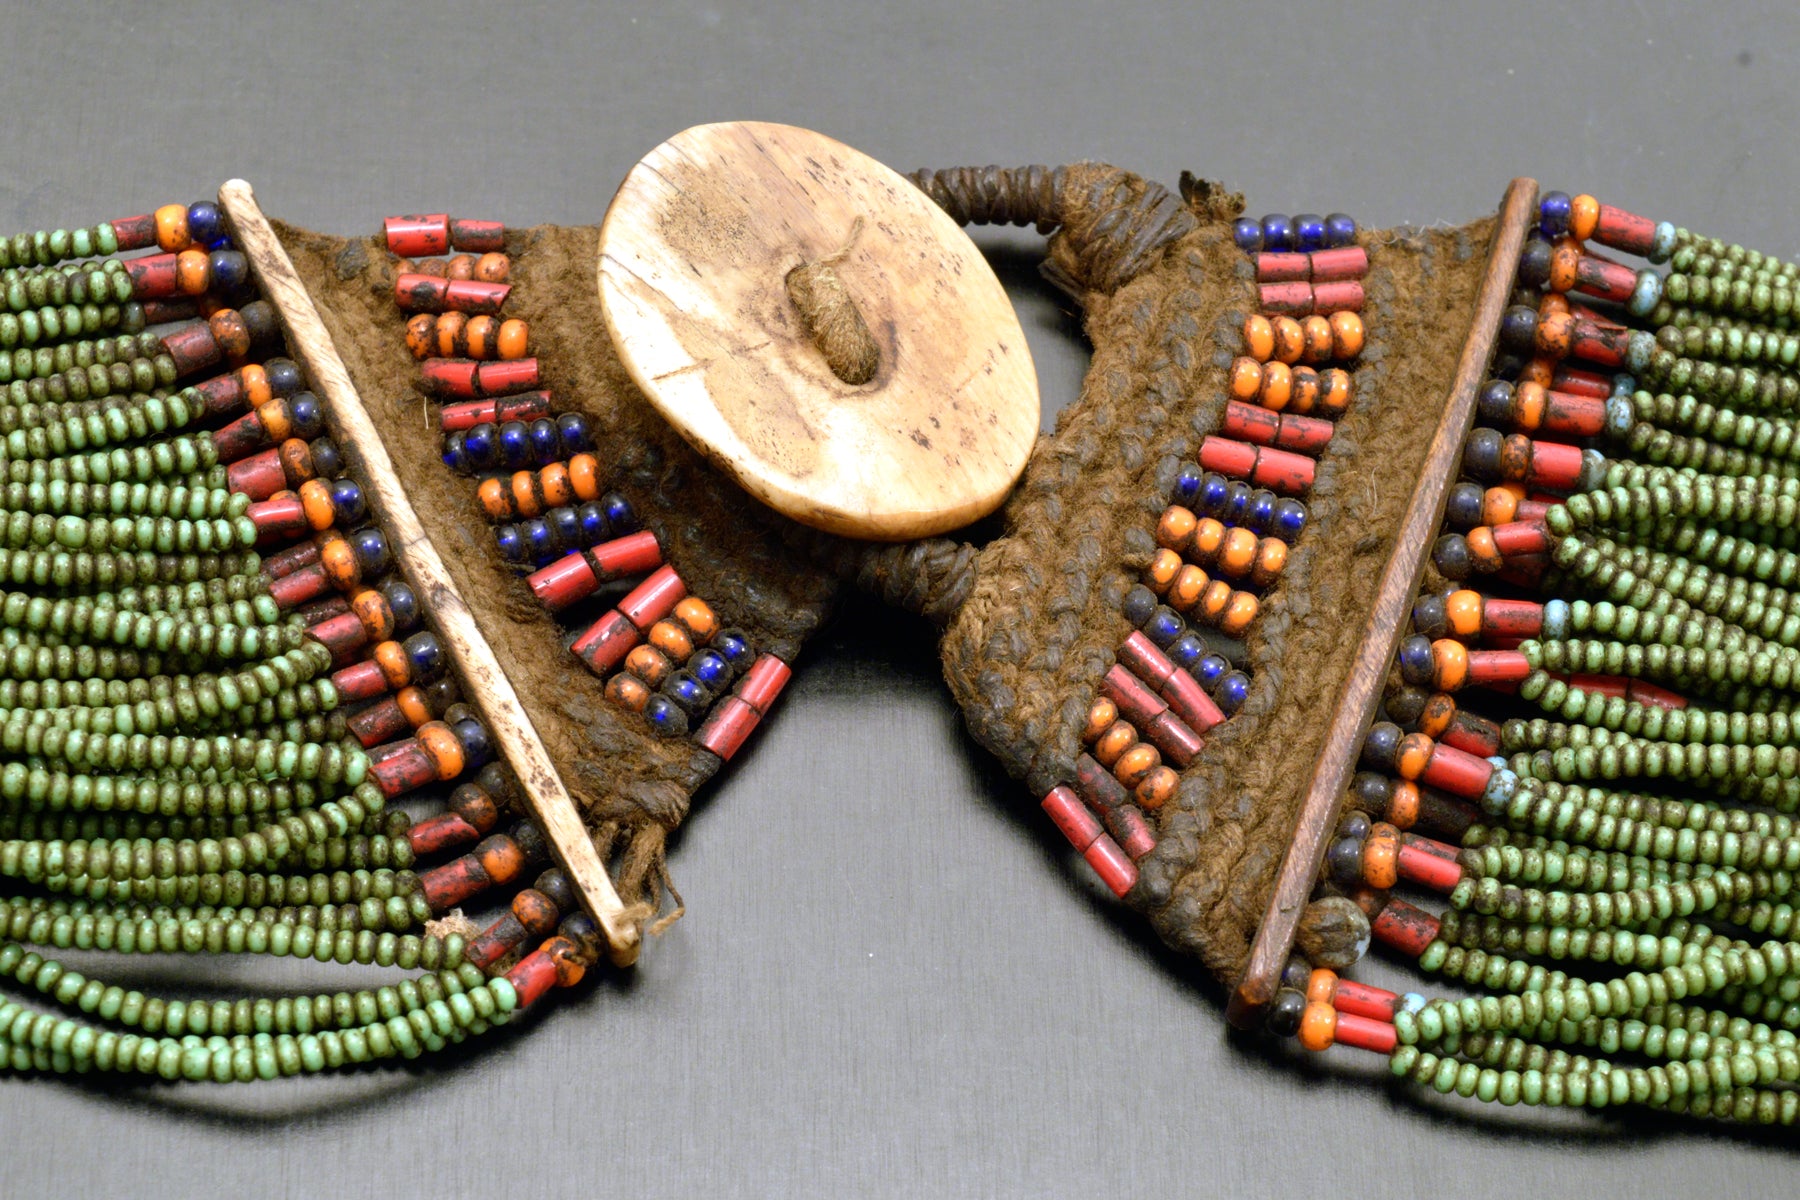 Naga bead necklace